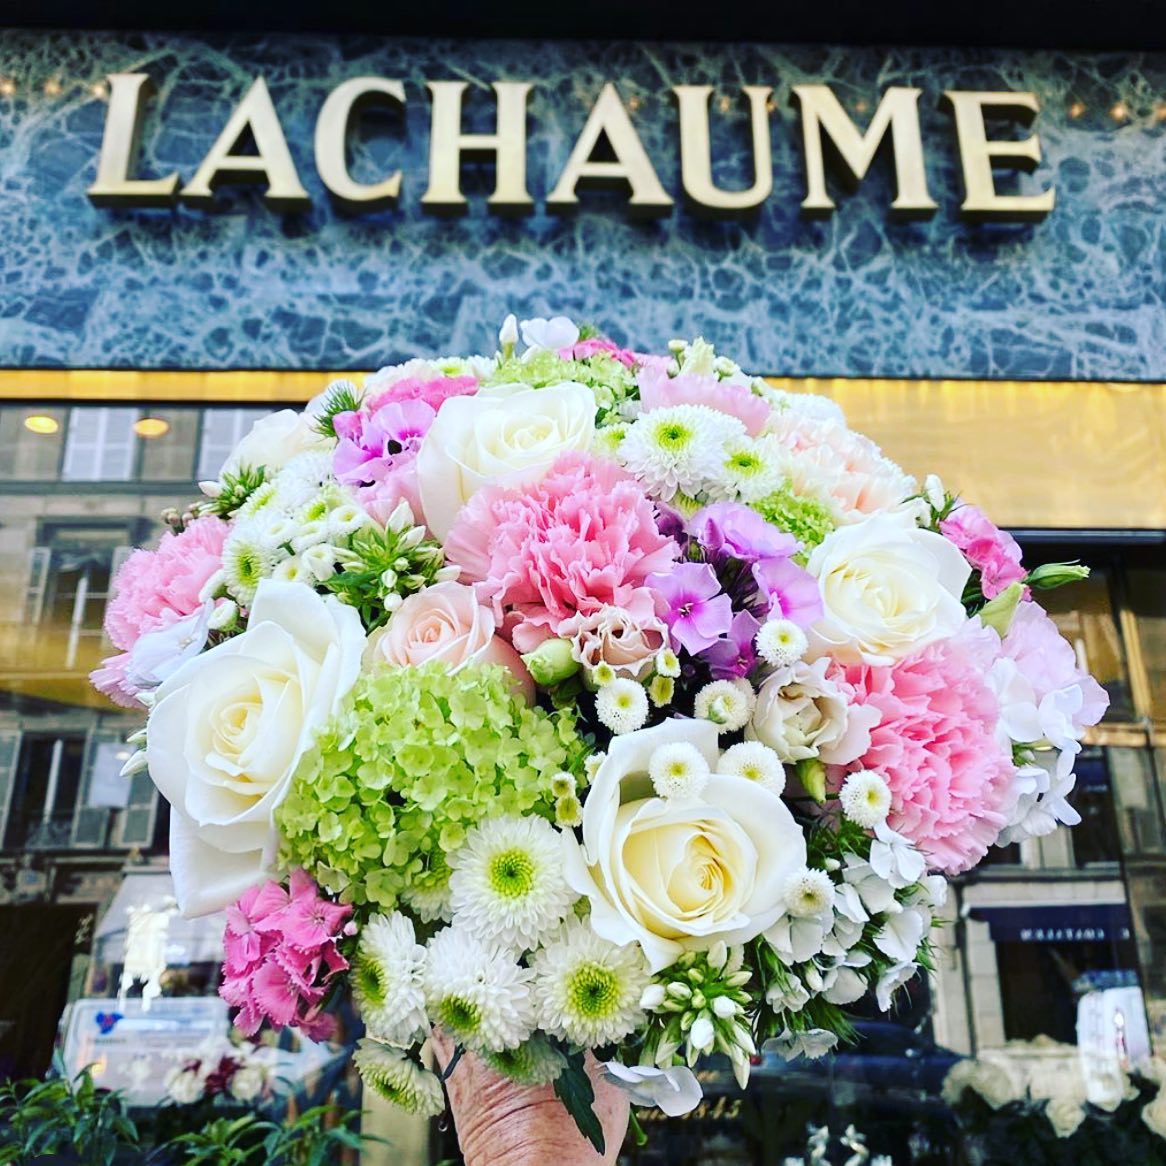 Lachaume Flower Shop in Paris - on Thursd